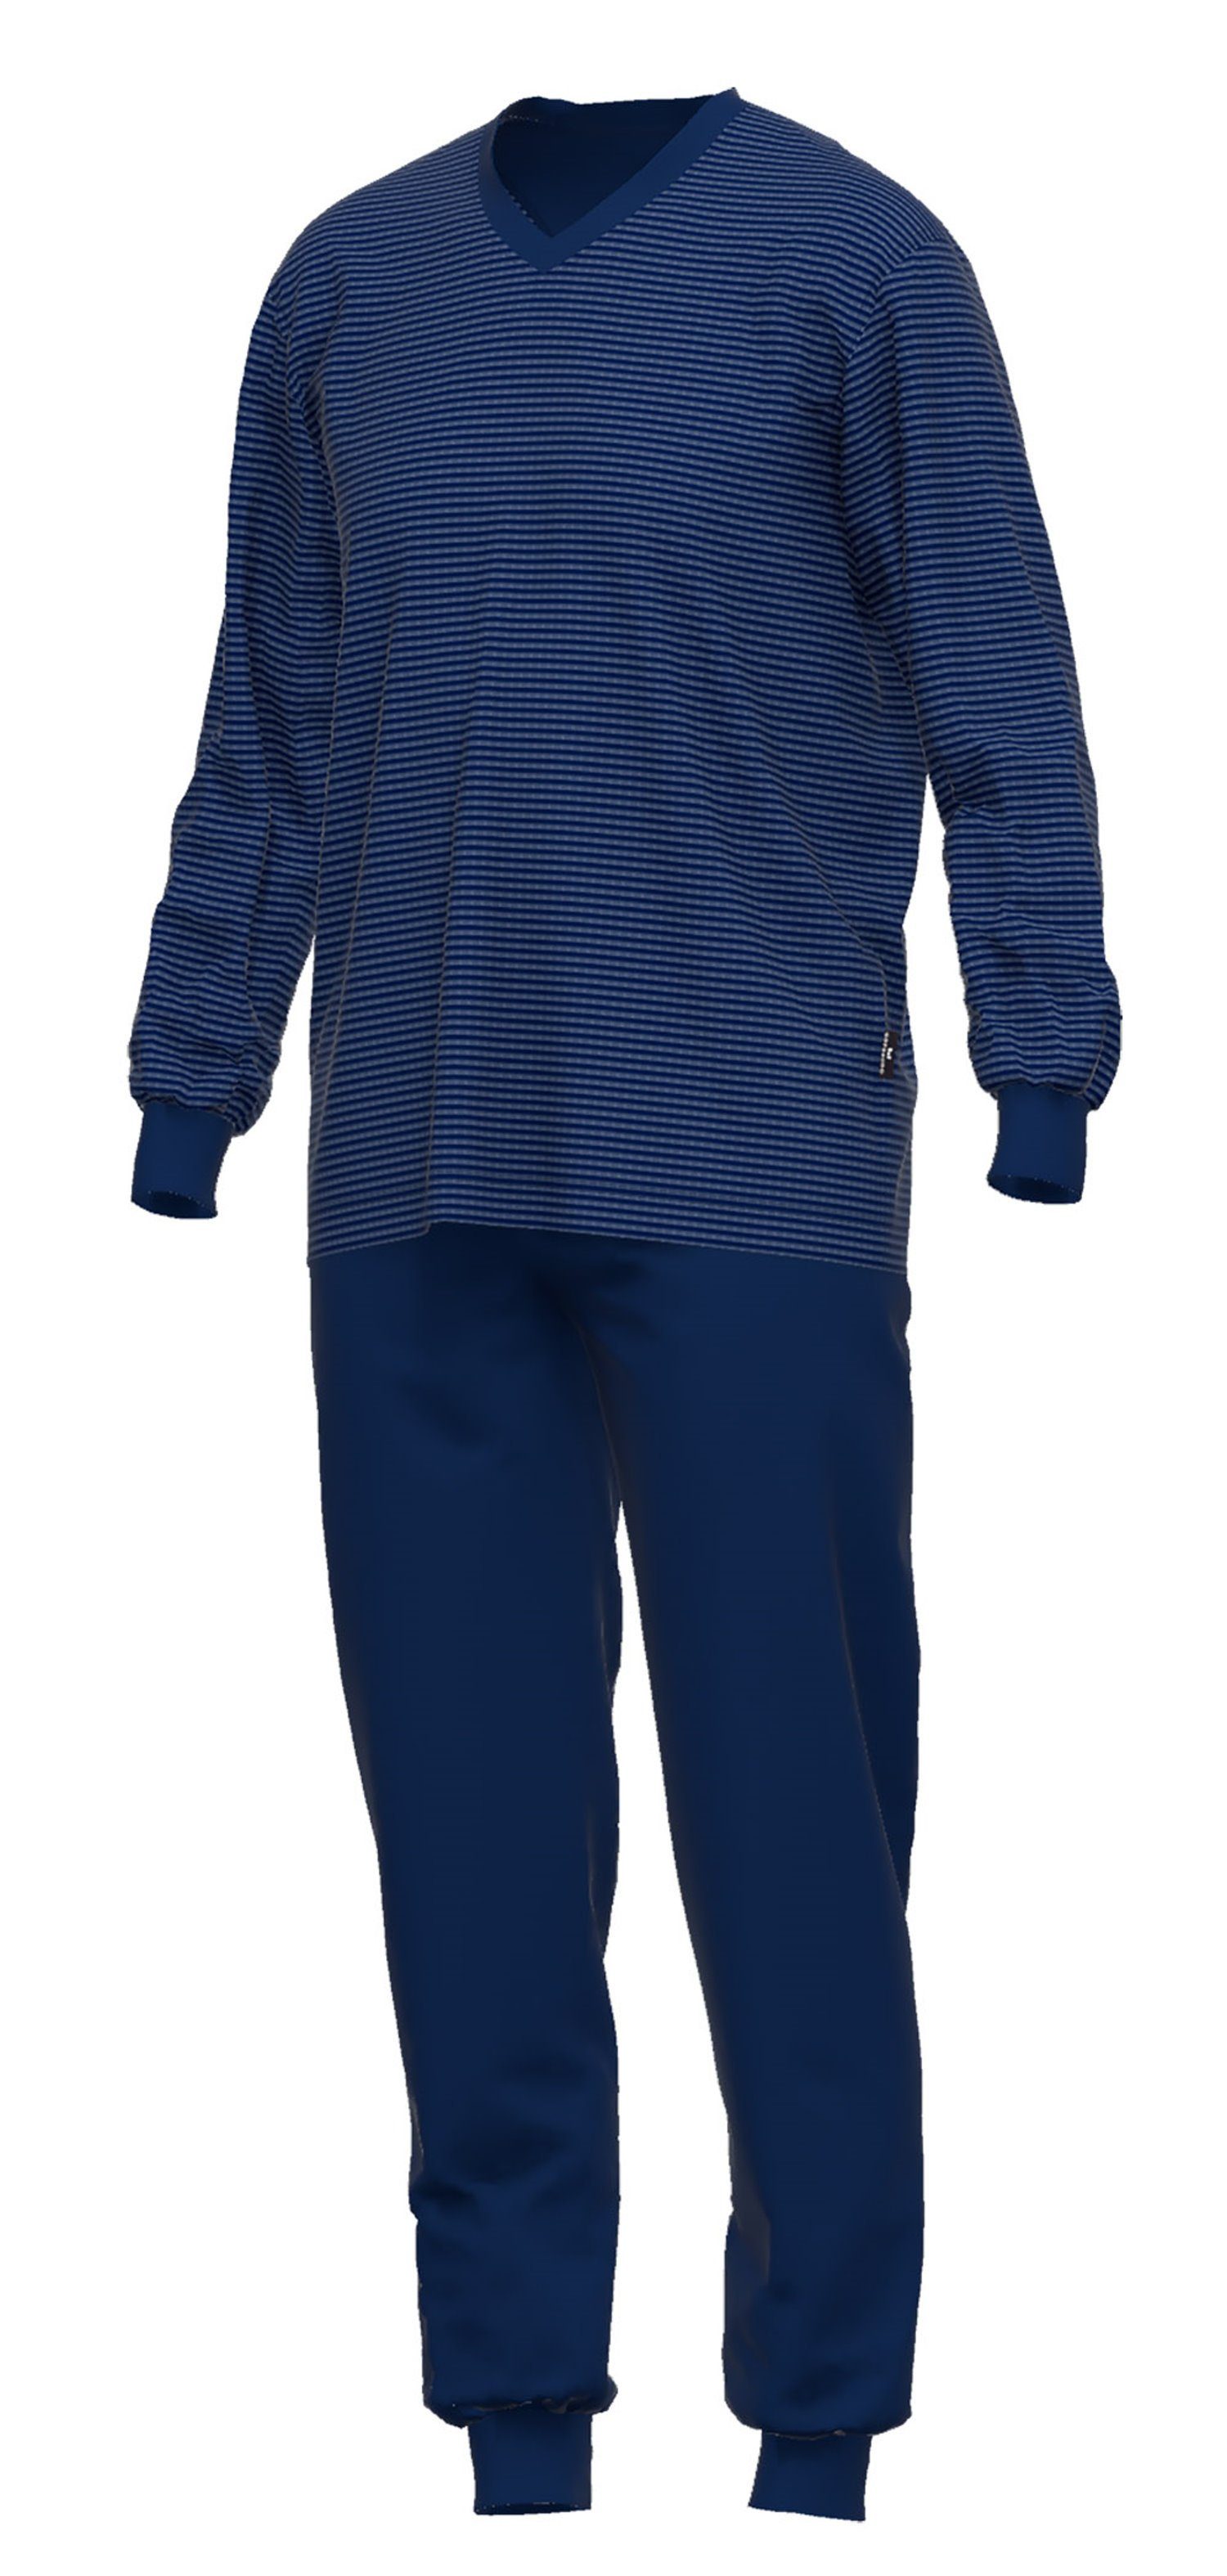 Götzburg Aktiv tlg) Aktiv Schlafanzug Bügelfrei Klima Pyjama blau-dunkel-ringel (2 | blau Klima Herren GÖTZBURG